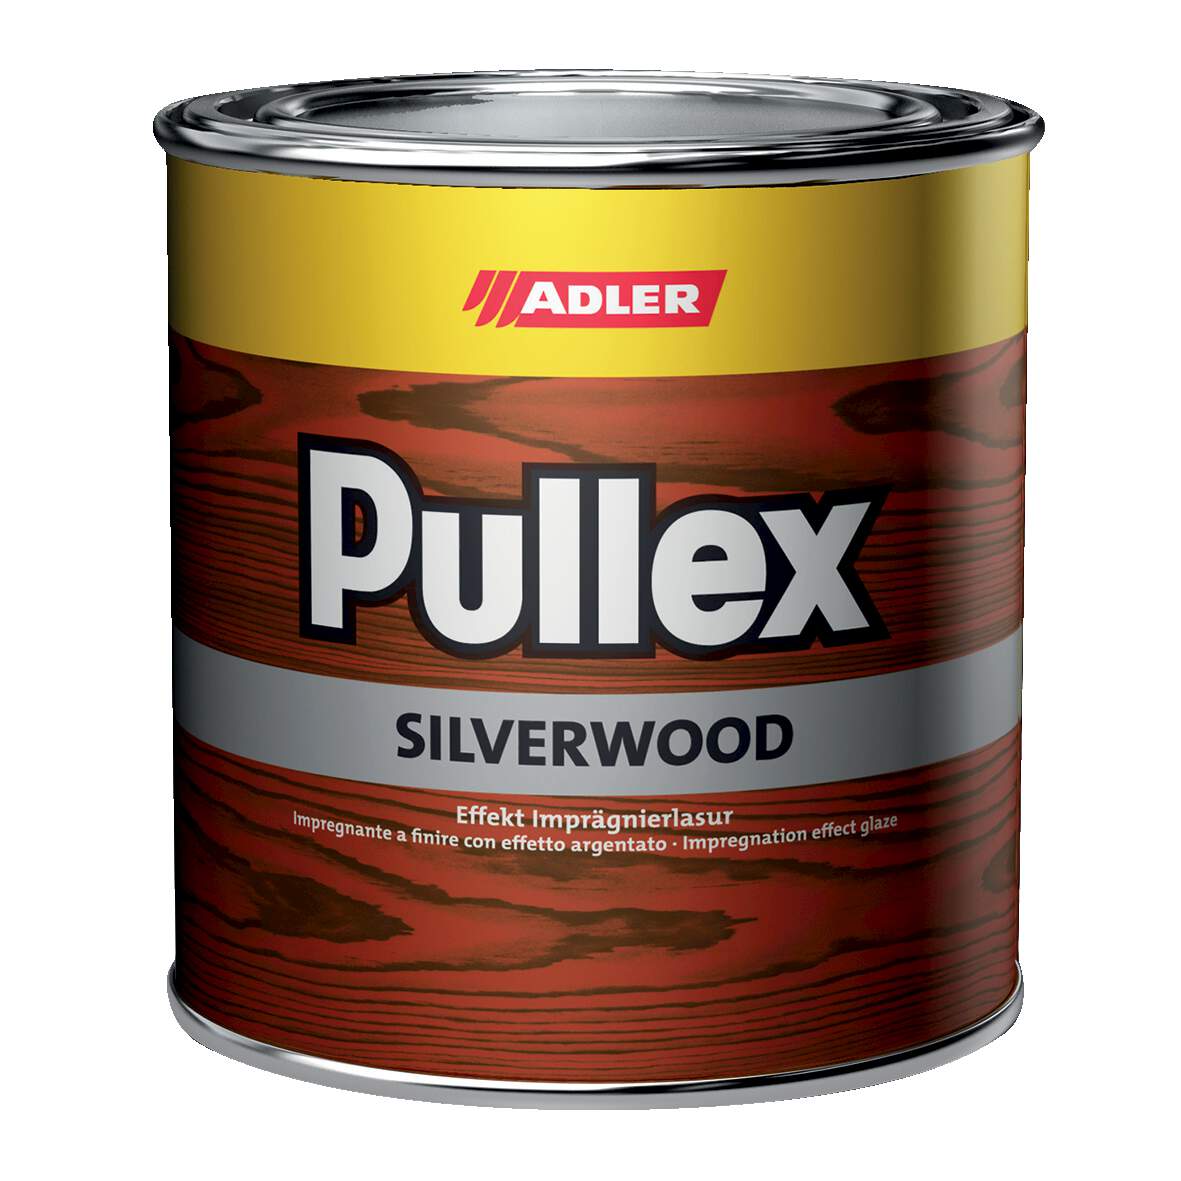 1095628 - Pullex-Silverwood